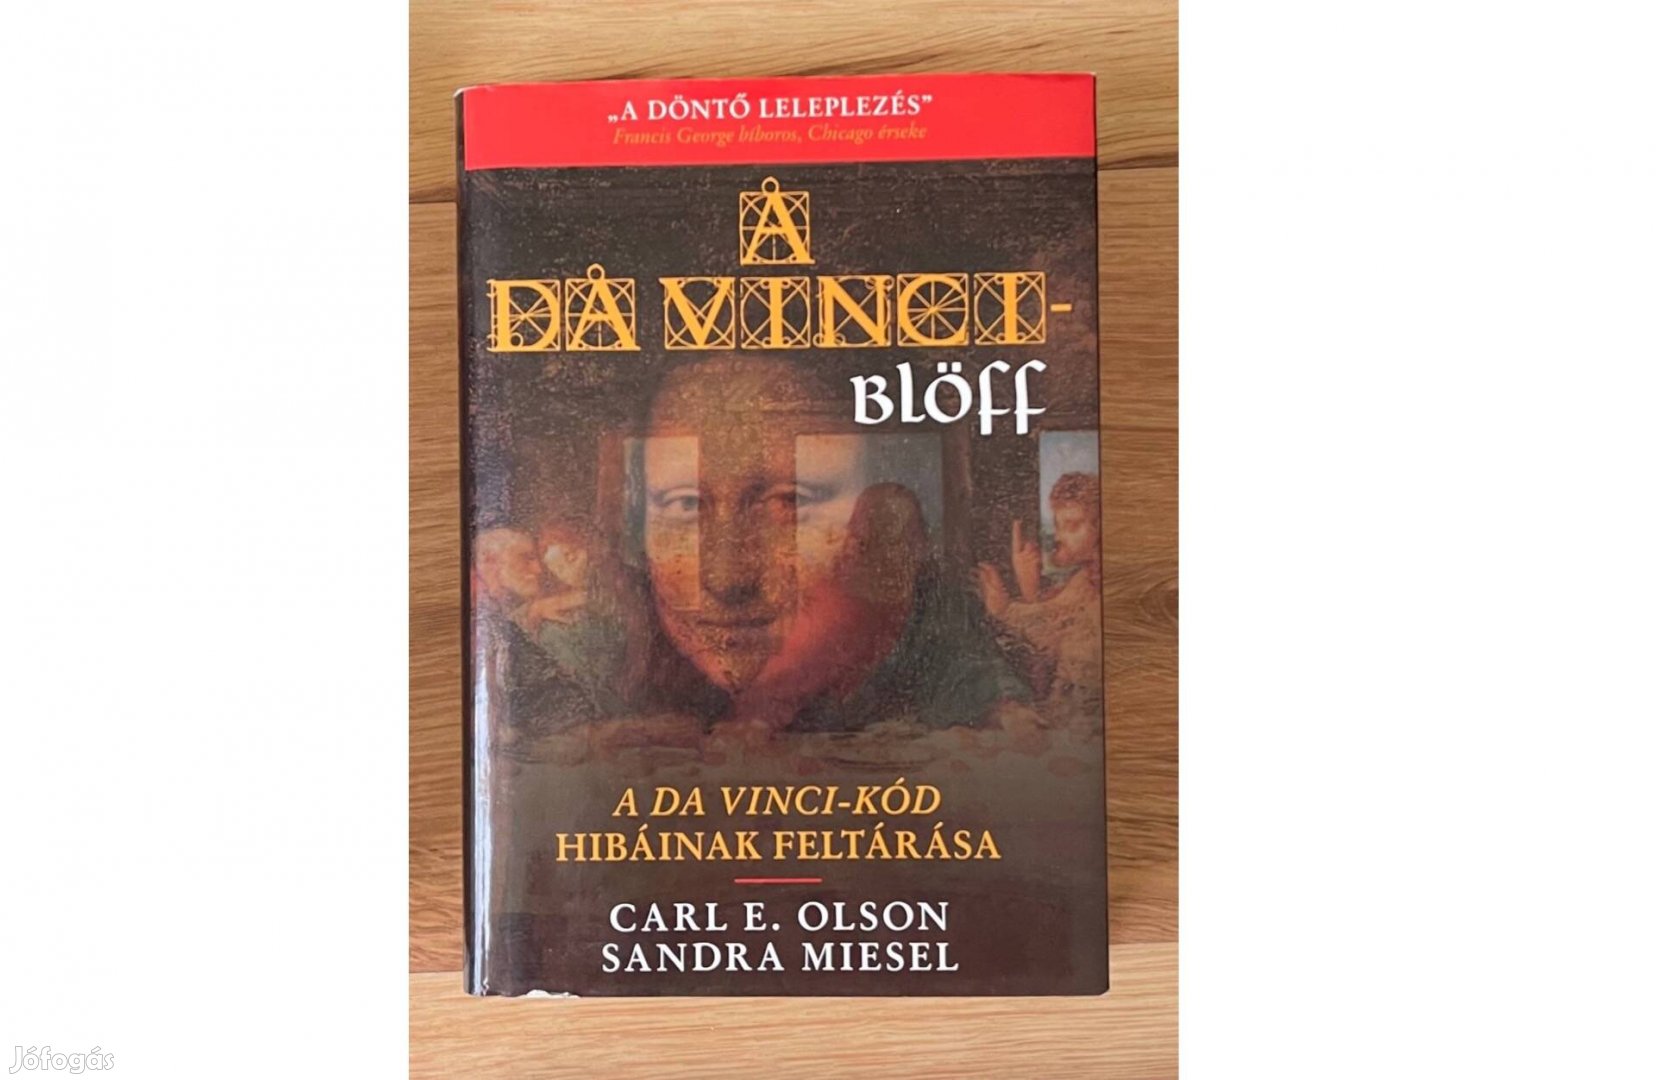 Carl E. Olson, Sandra Miesel - A Da Vinci-blöff